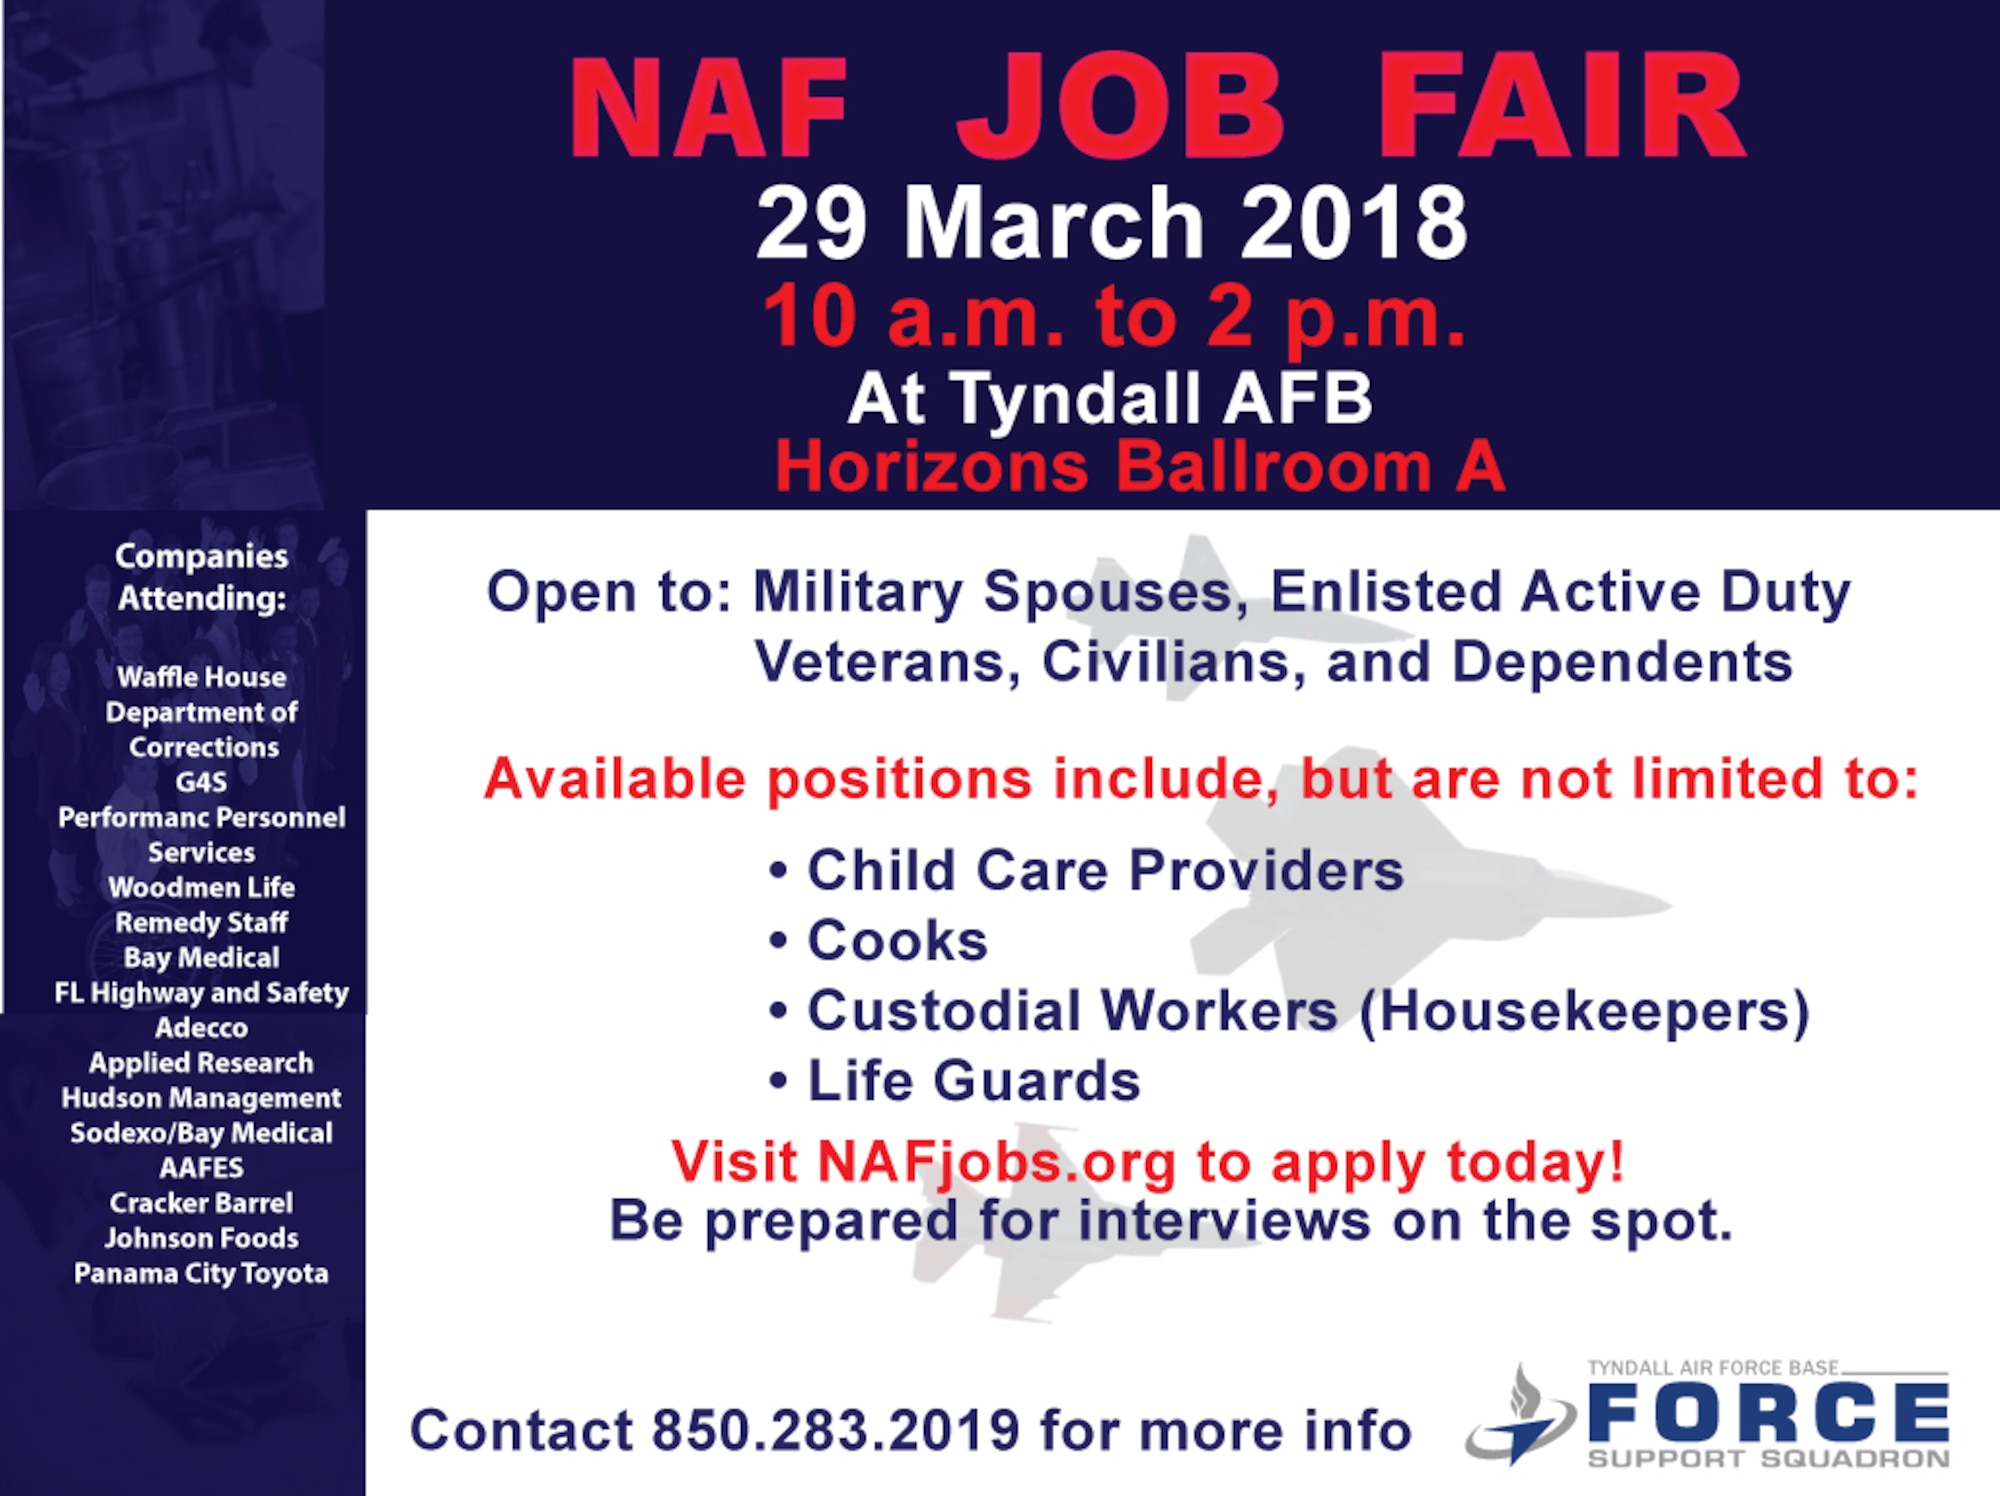 NAF Job Fair coming to Tyndall